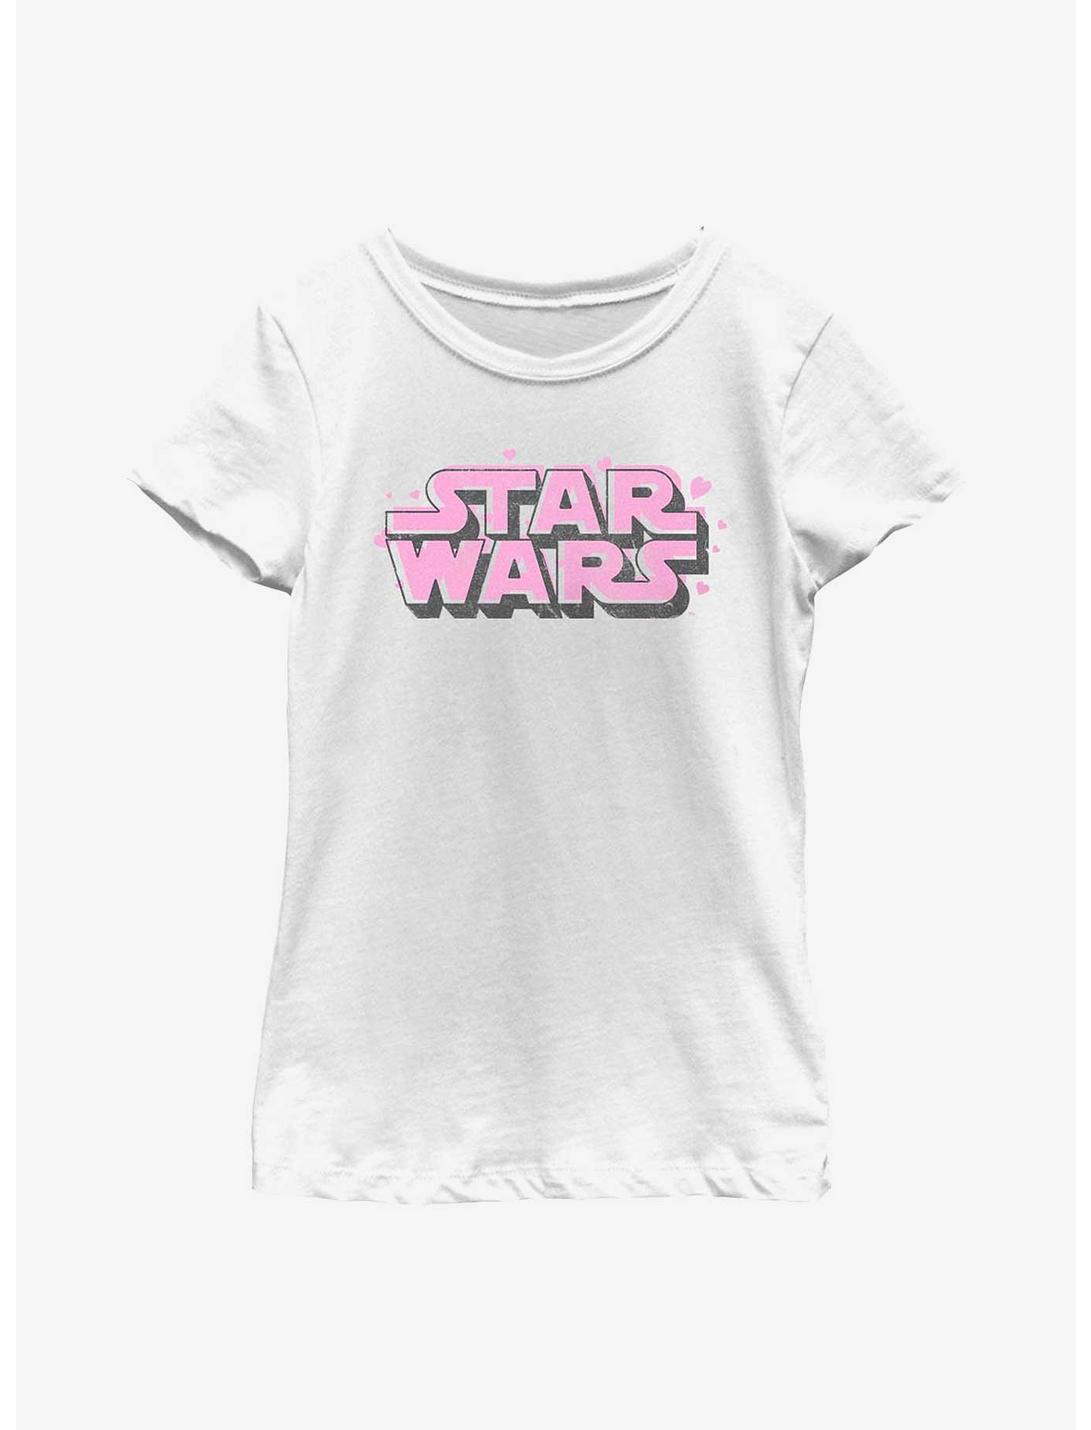 Star Wars Floating Hearts Logo Youth Girls T-Shirt, WHITE, hi-res